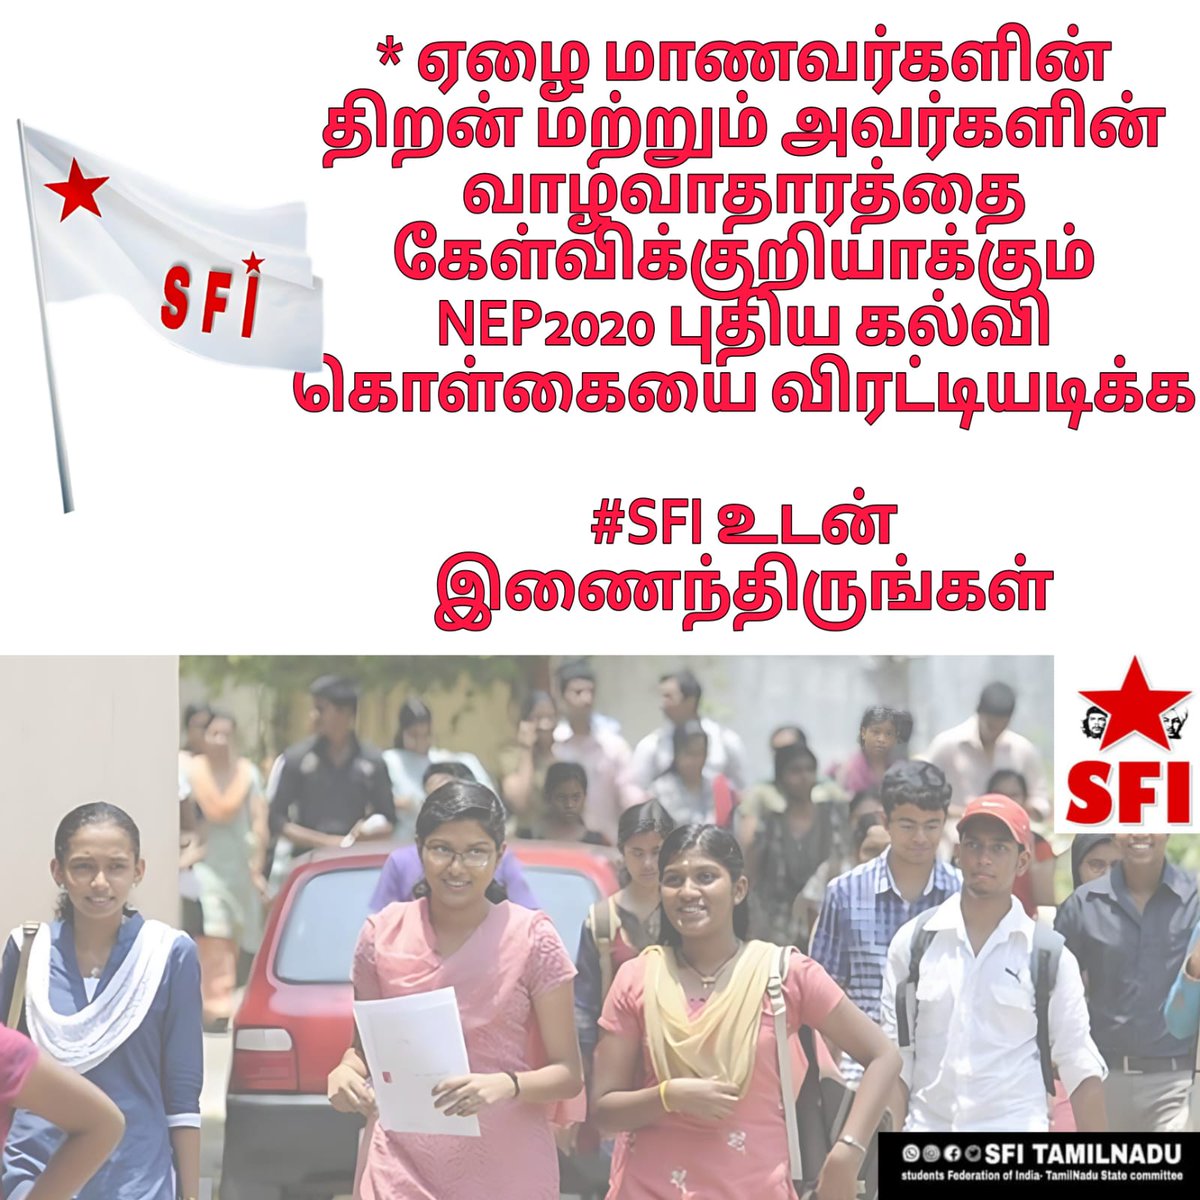 #ConnectWithSFI
#SFItamilnadu 
#SFI